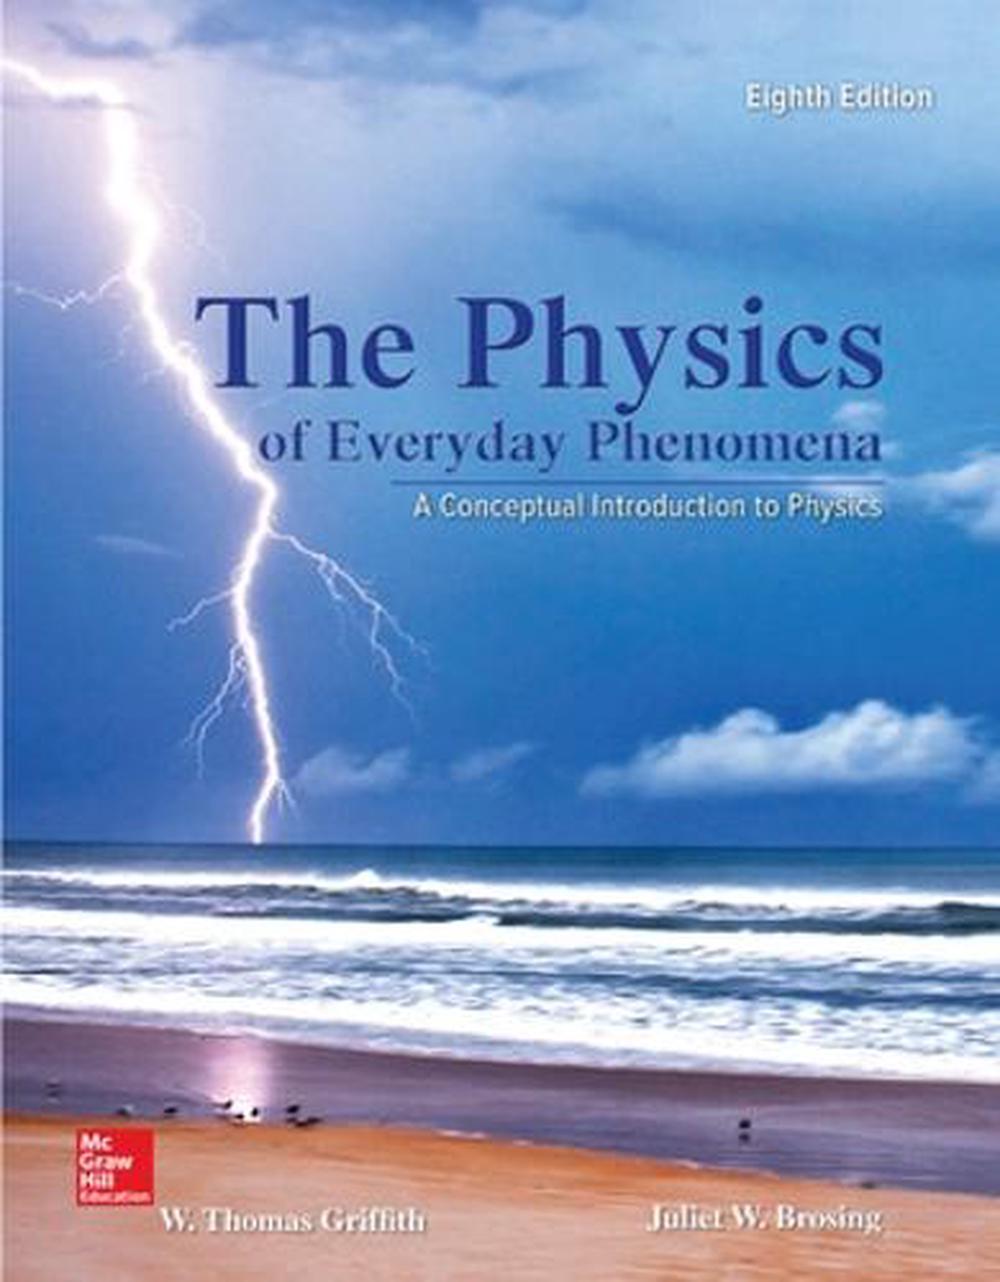 simple physics phenomena